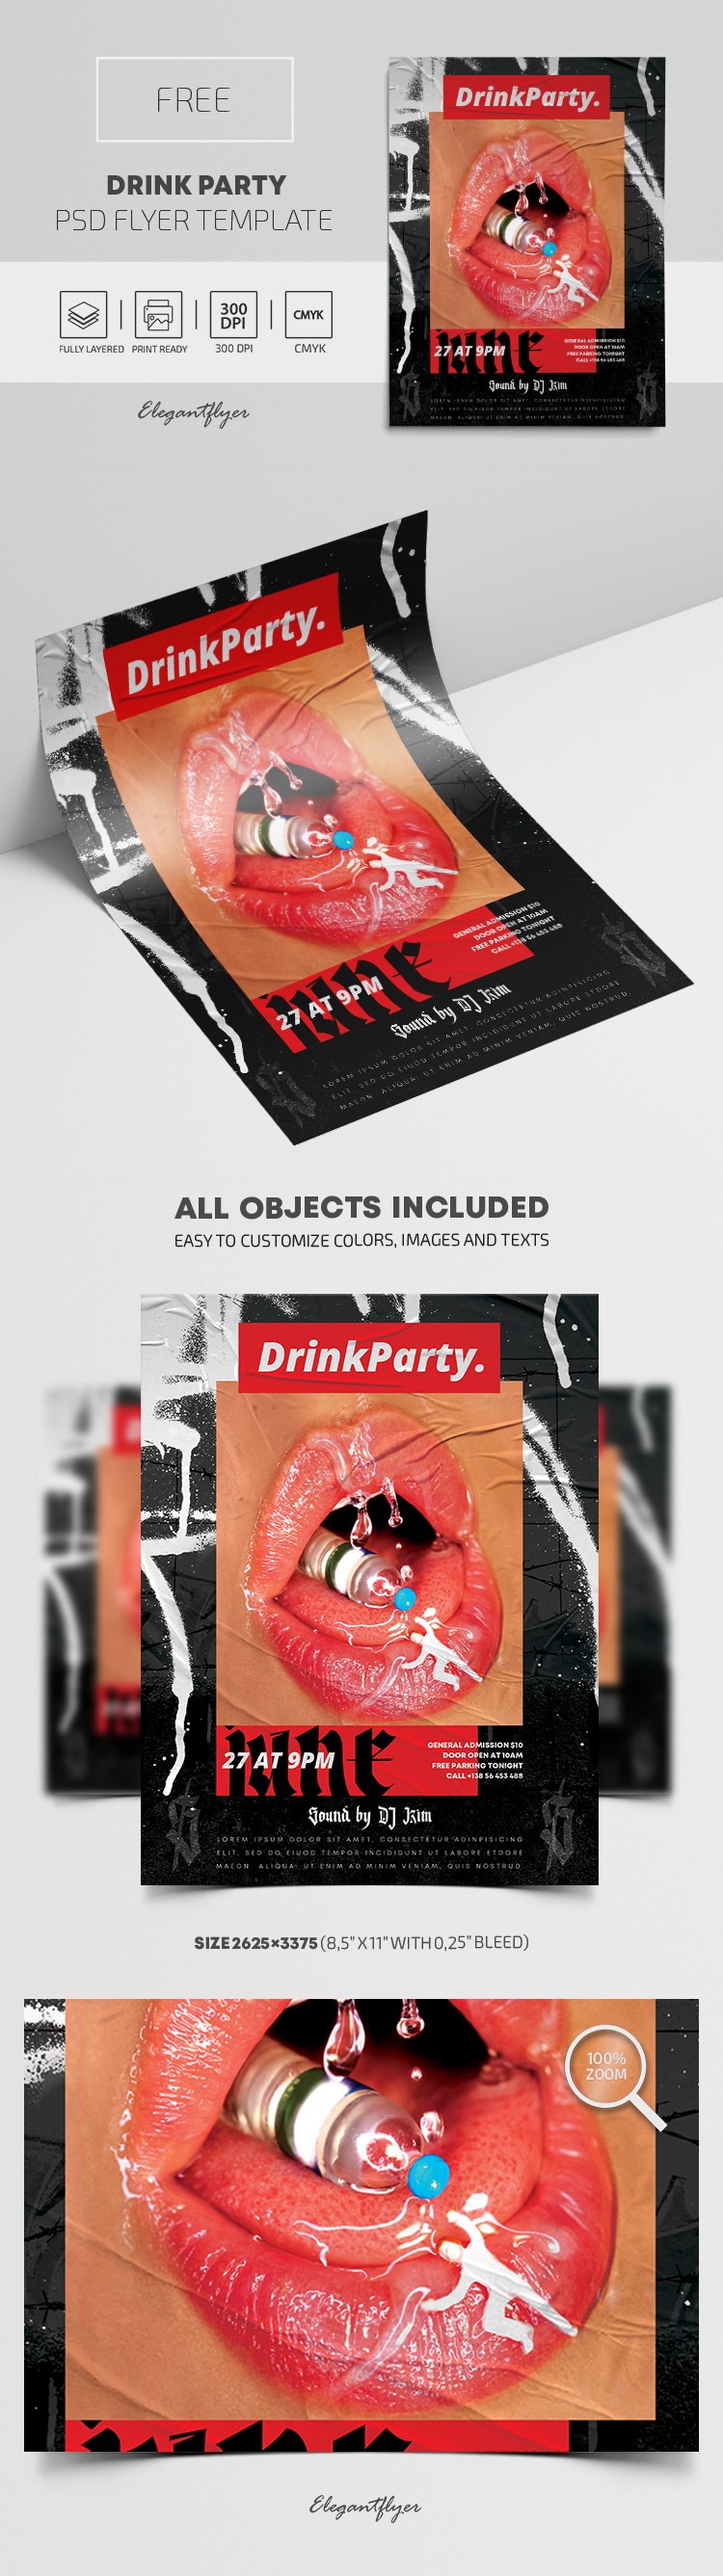 Drink Party Flyer by ElegantFlyer